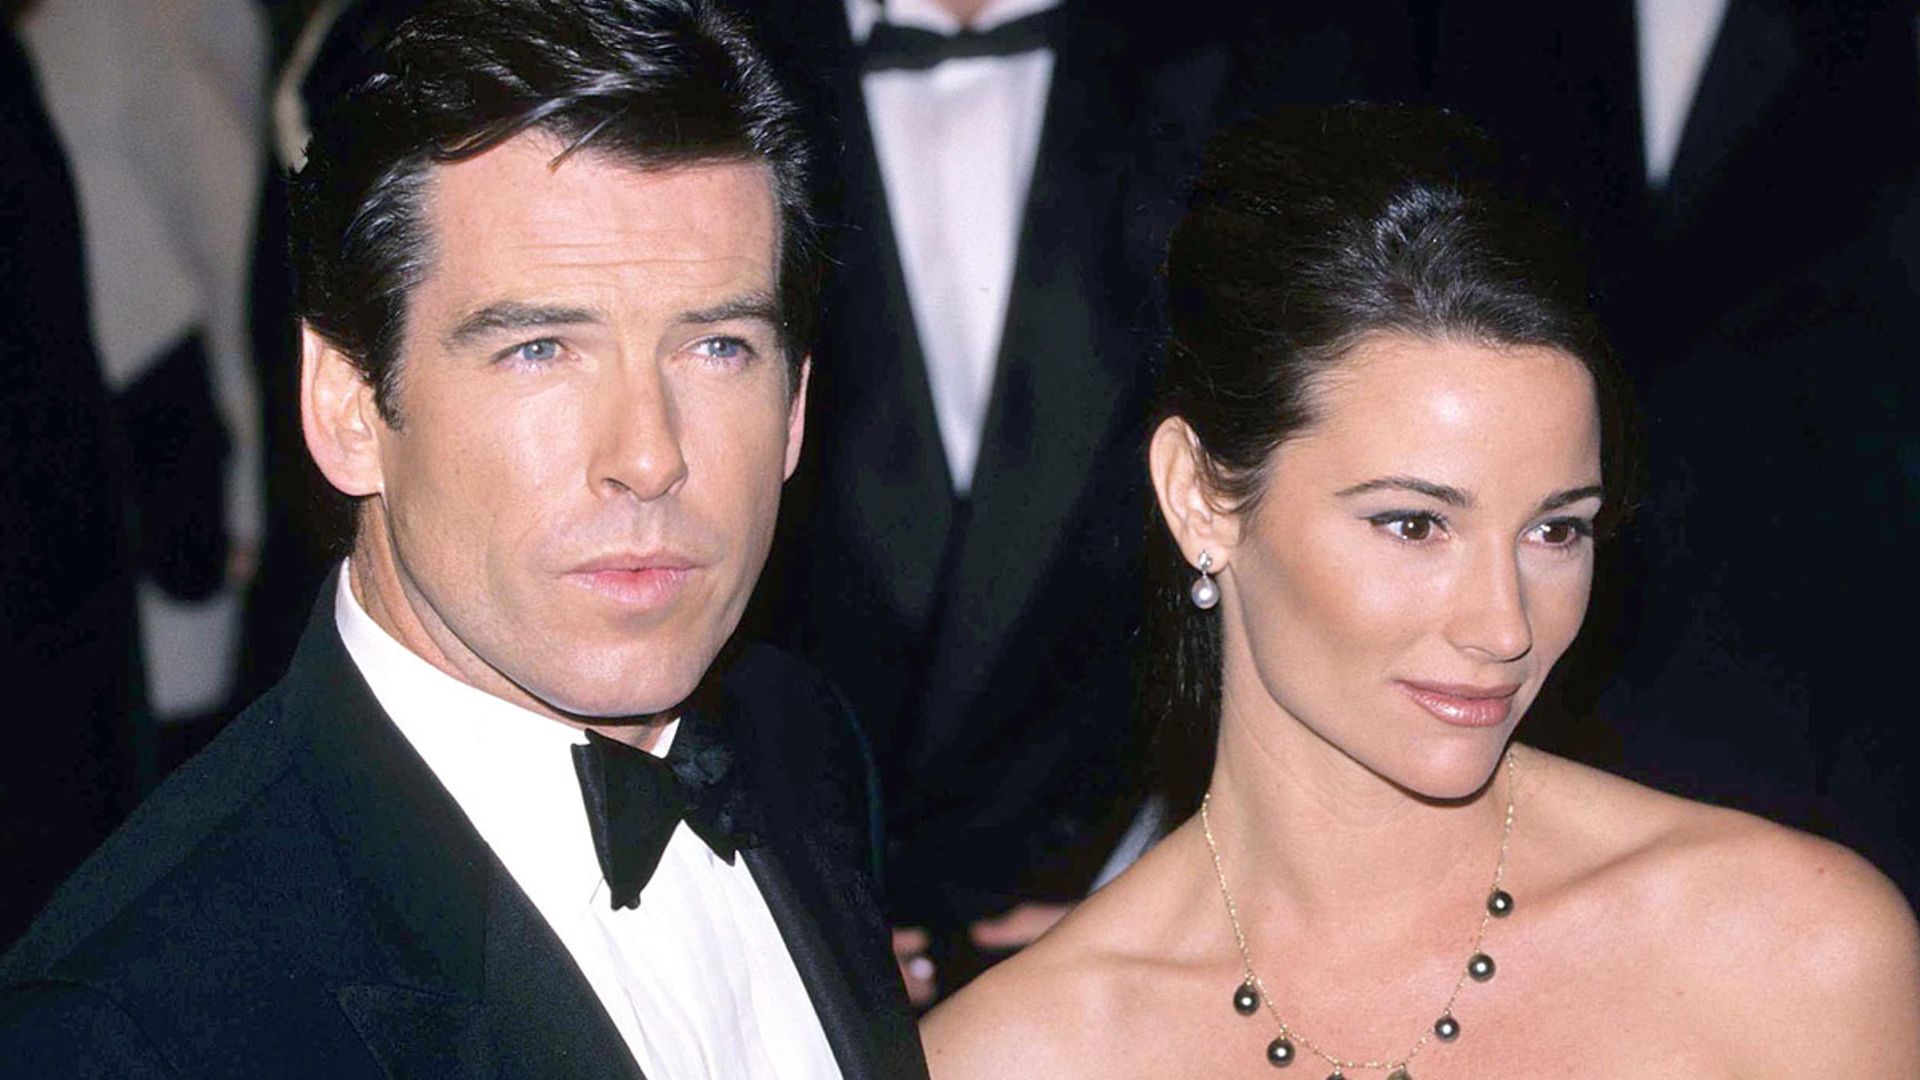 Pierce Brosnan and wife Keely's super secretive wedding was Bond-worthy